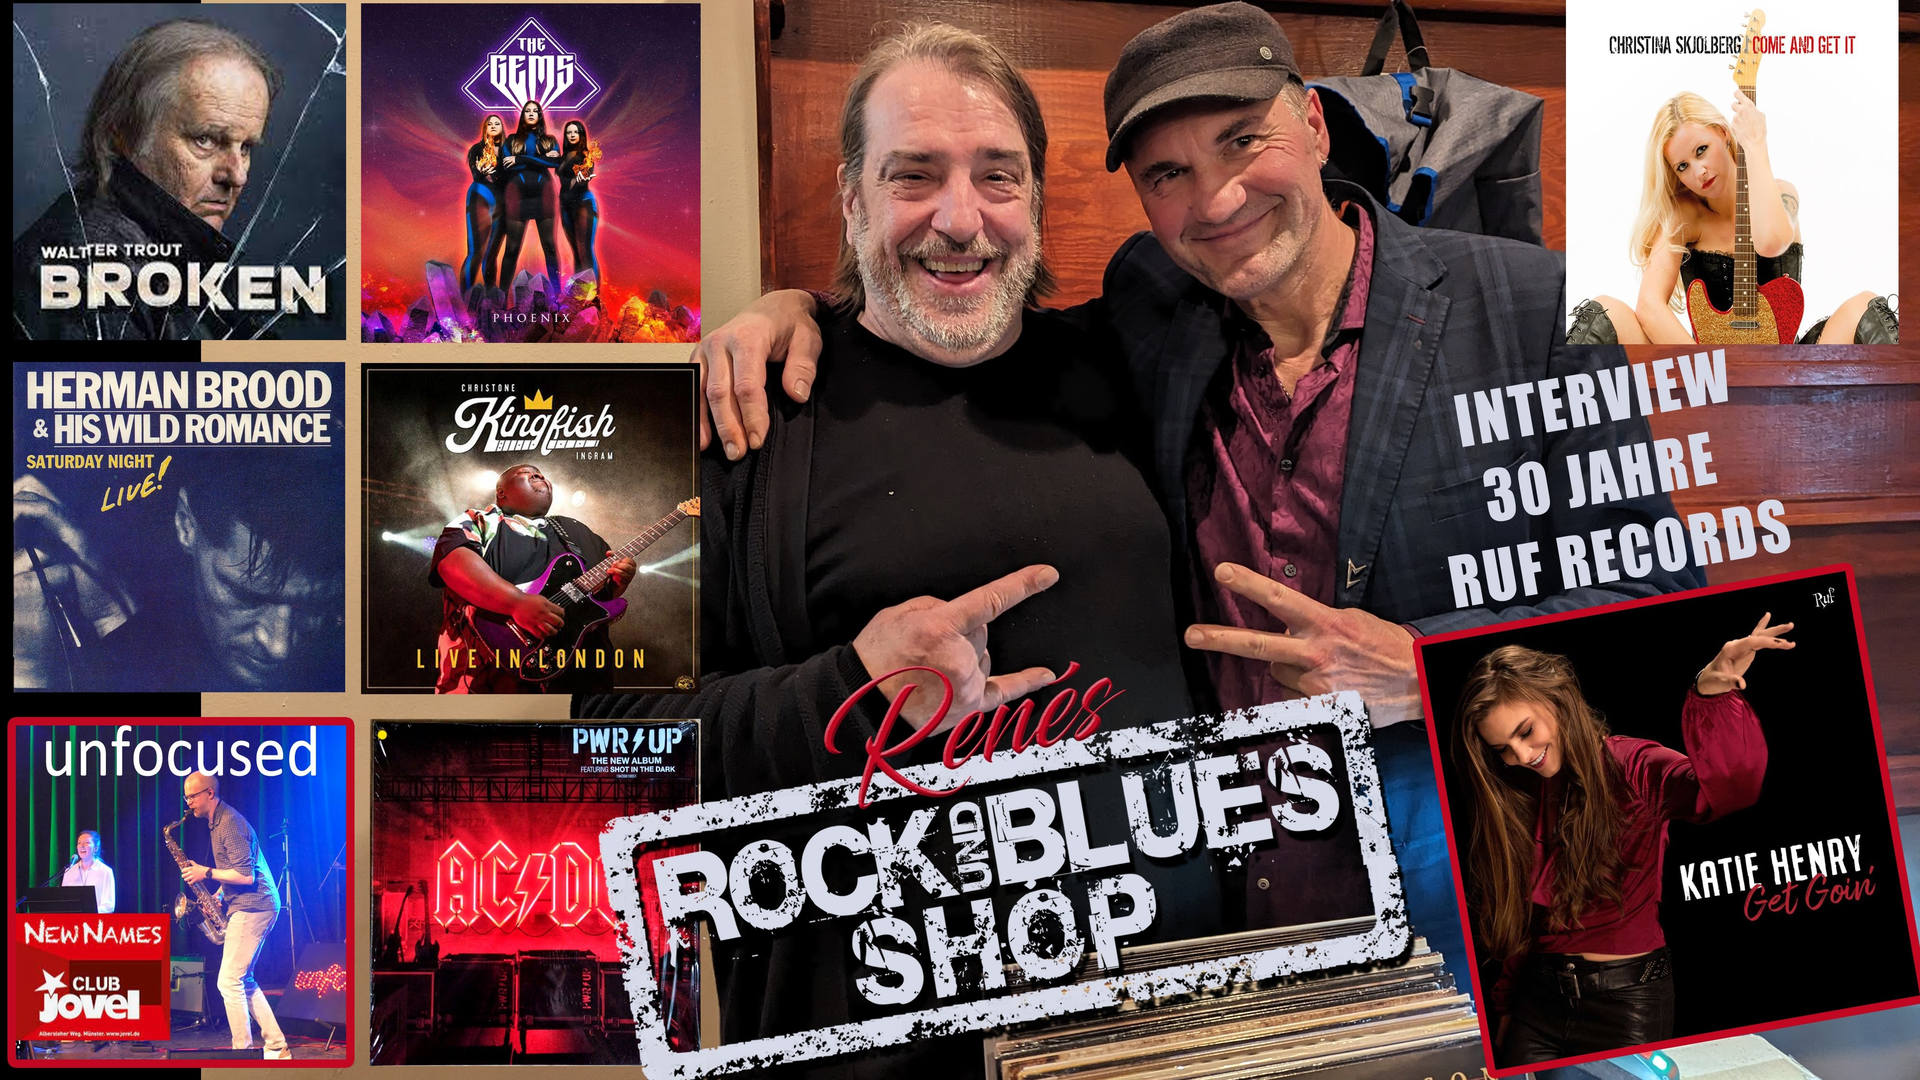 Renés Rock- und Blues-Shop: Ruf Records - Christina Skjolberg, Katie Henry